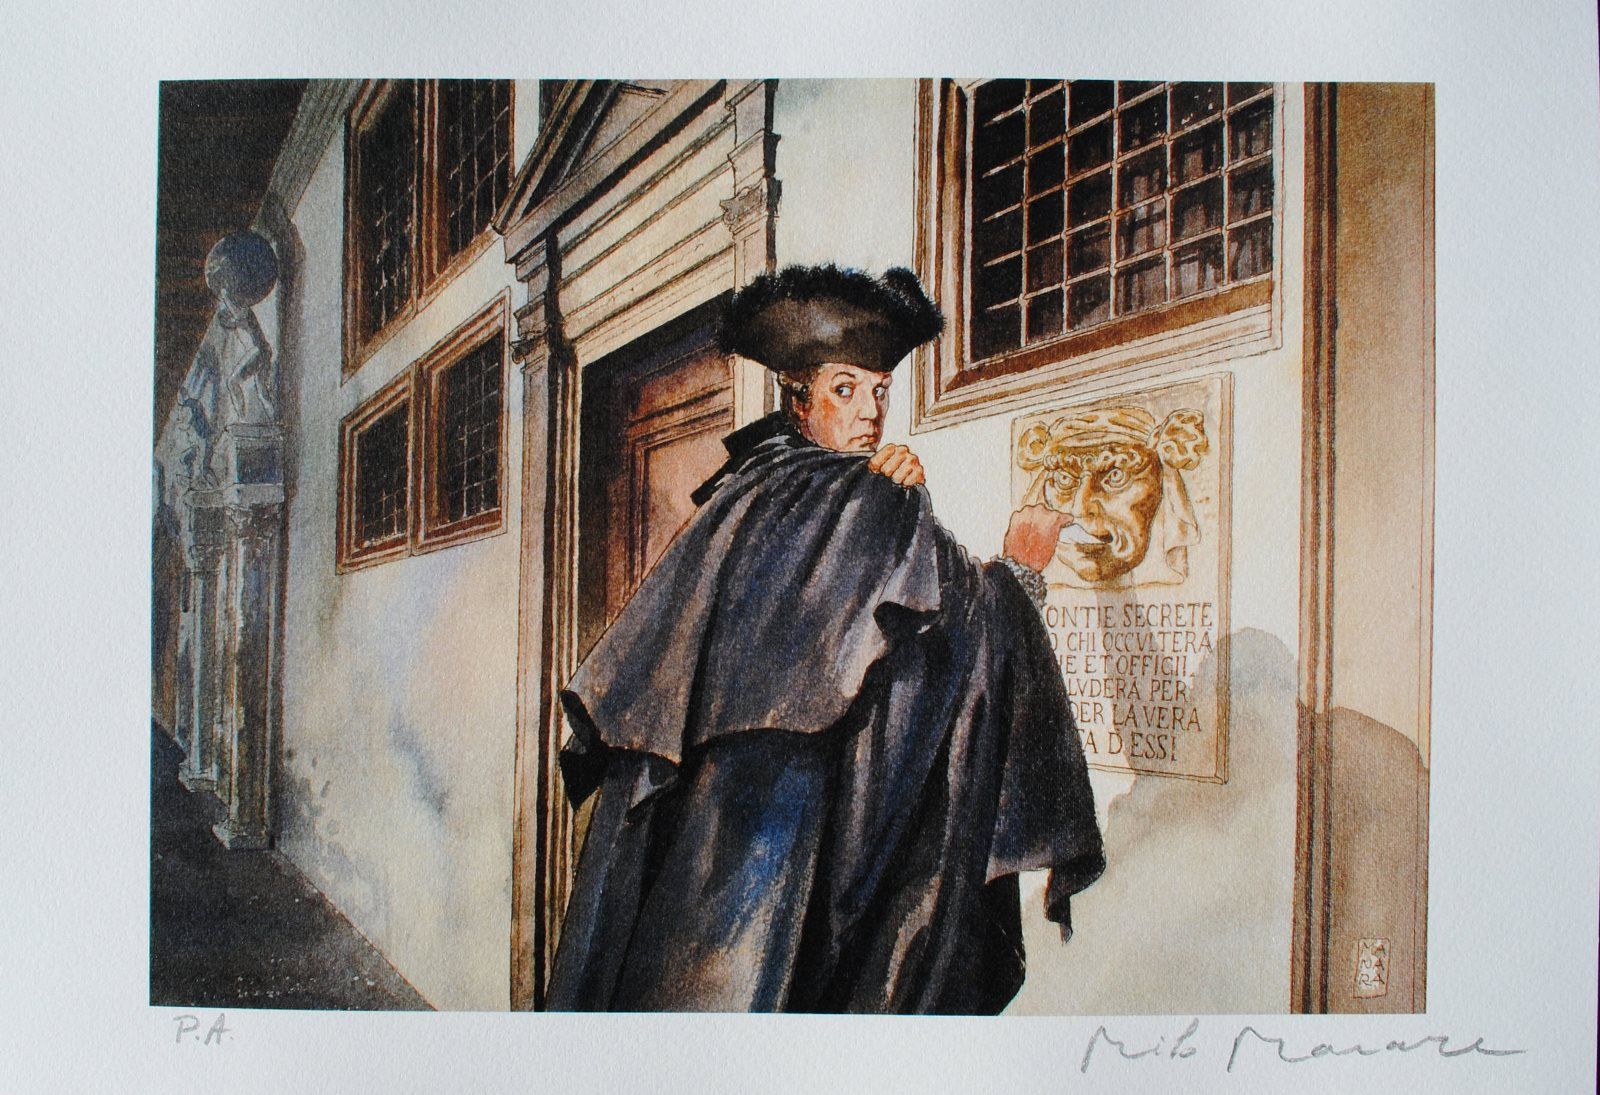 Milo Manara 米洛-马纳拉(1945-)

在威尼斯的告发

 

 数字印刷

 用铅笔签名

 作为艺术家的证明 "P.A."（Prova d'A&hellip;